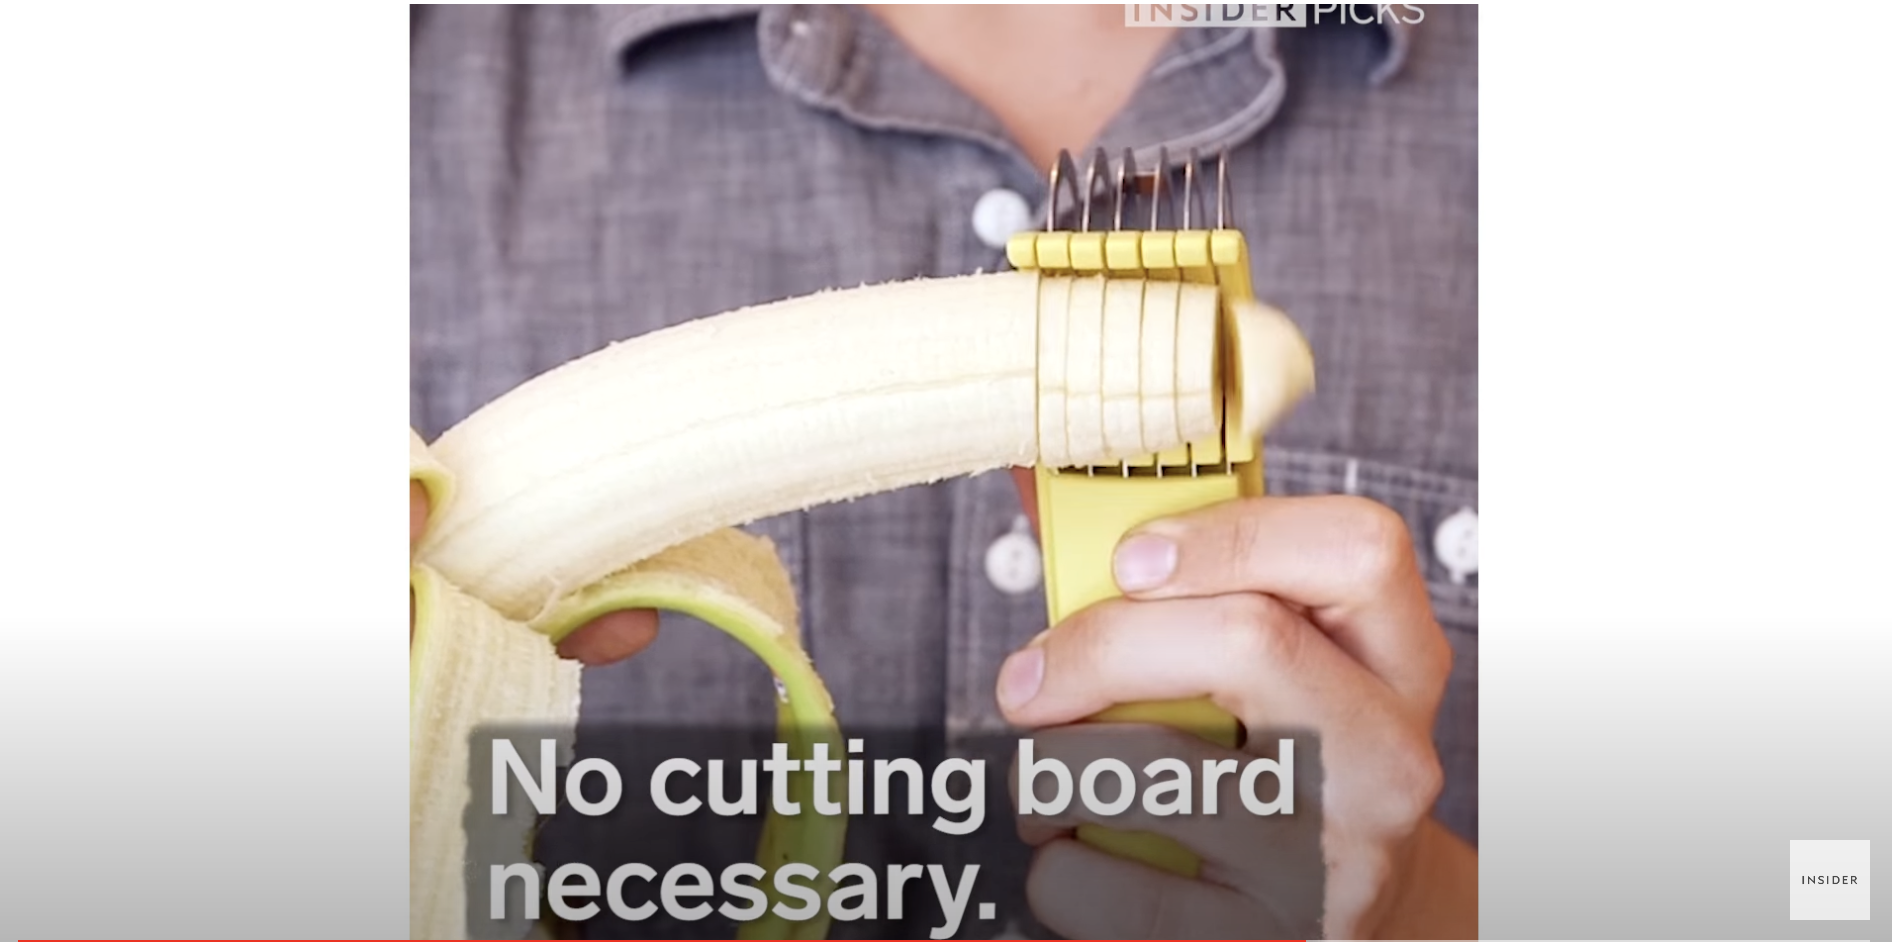 A banana slicer | Source: YouTube/Insider